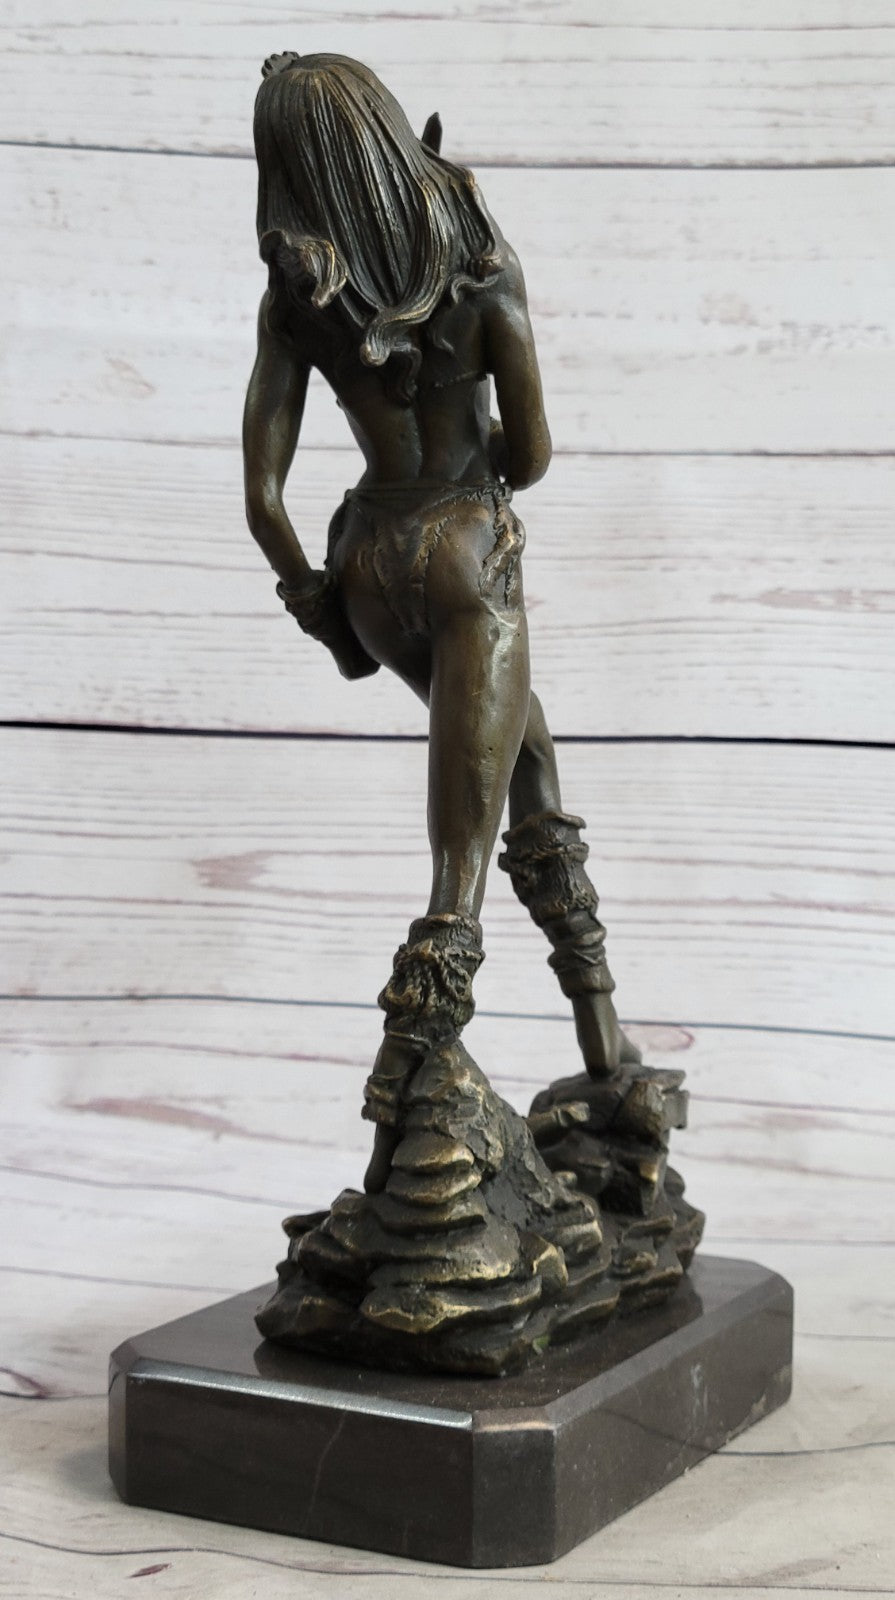 Handcrafted bronze sculpture SALE Vitaleh Aldo Artist Italian Original Signed